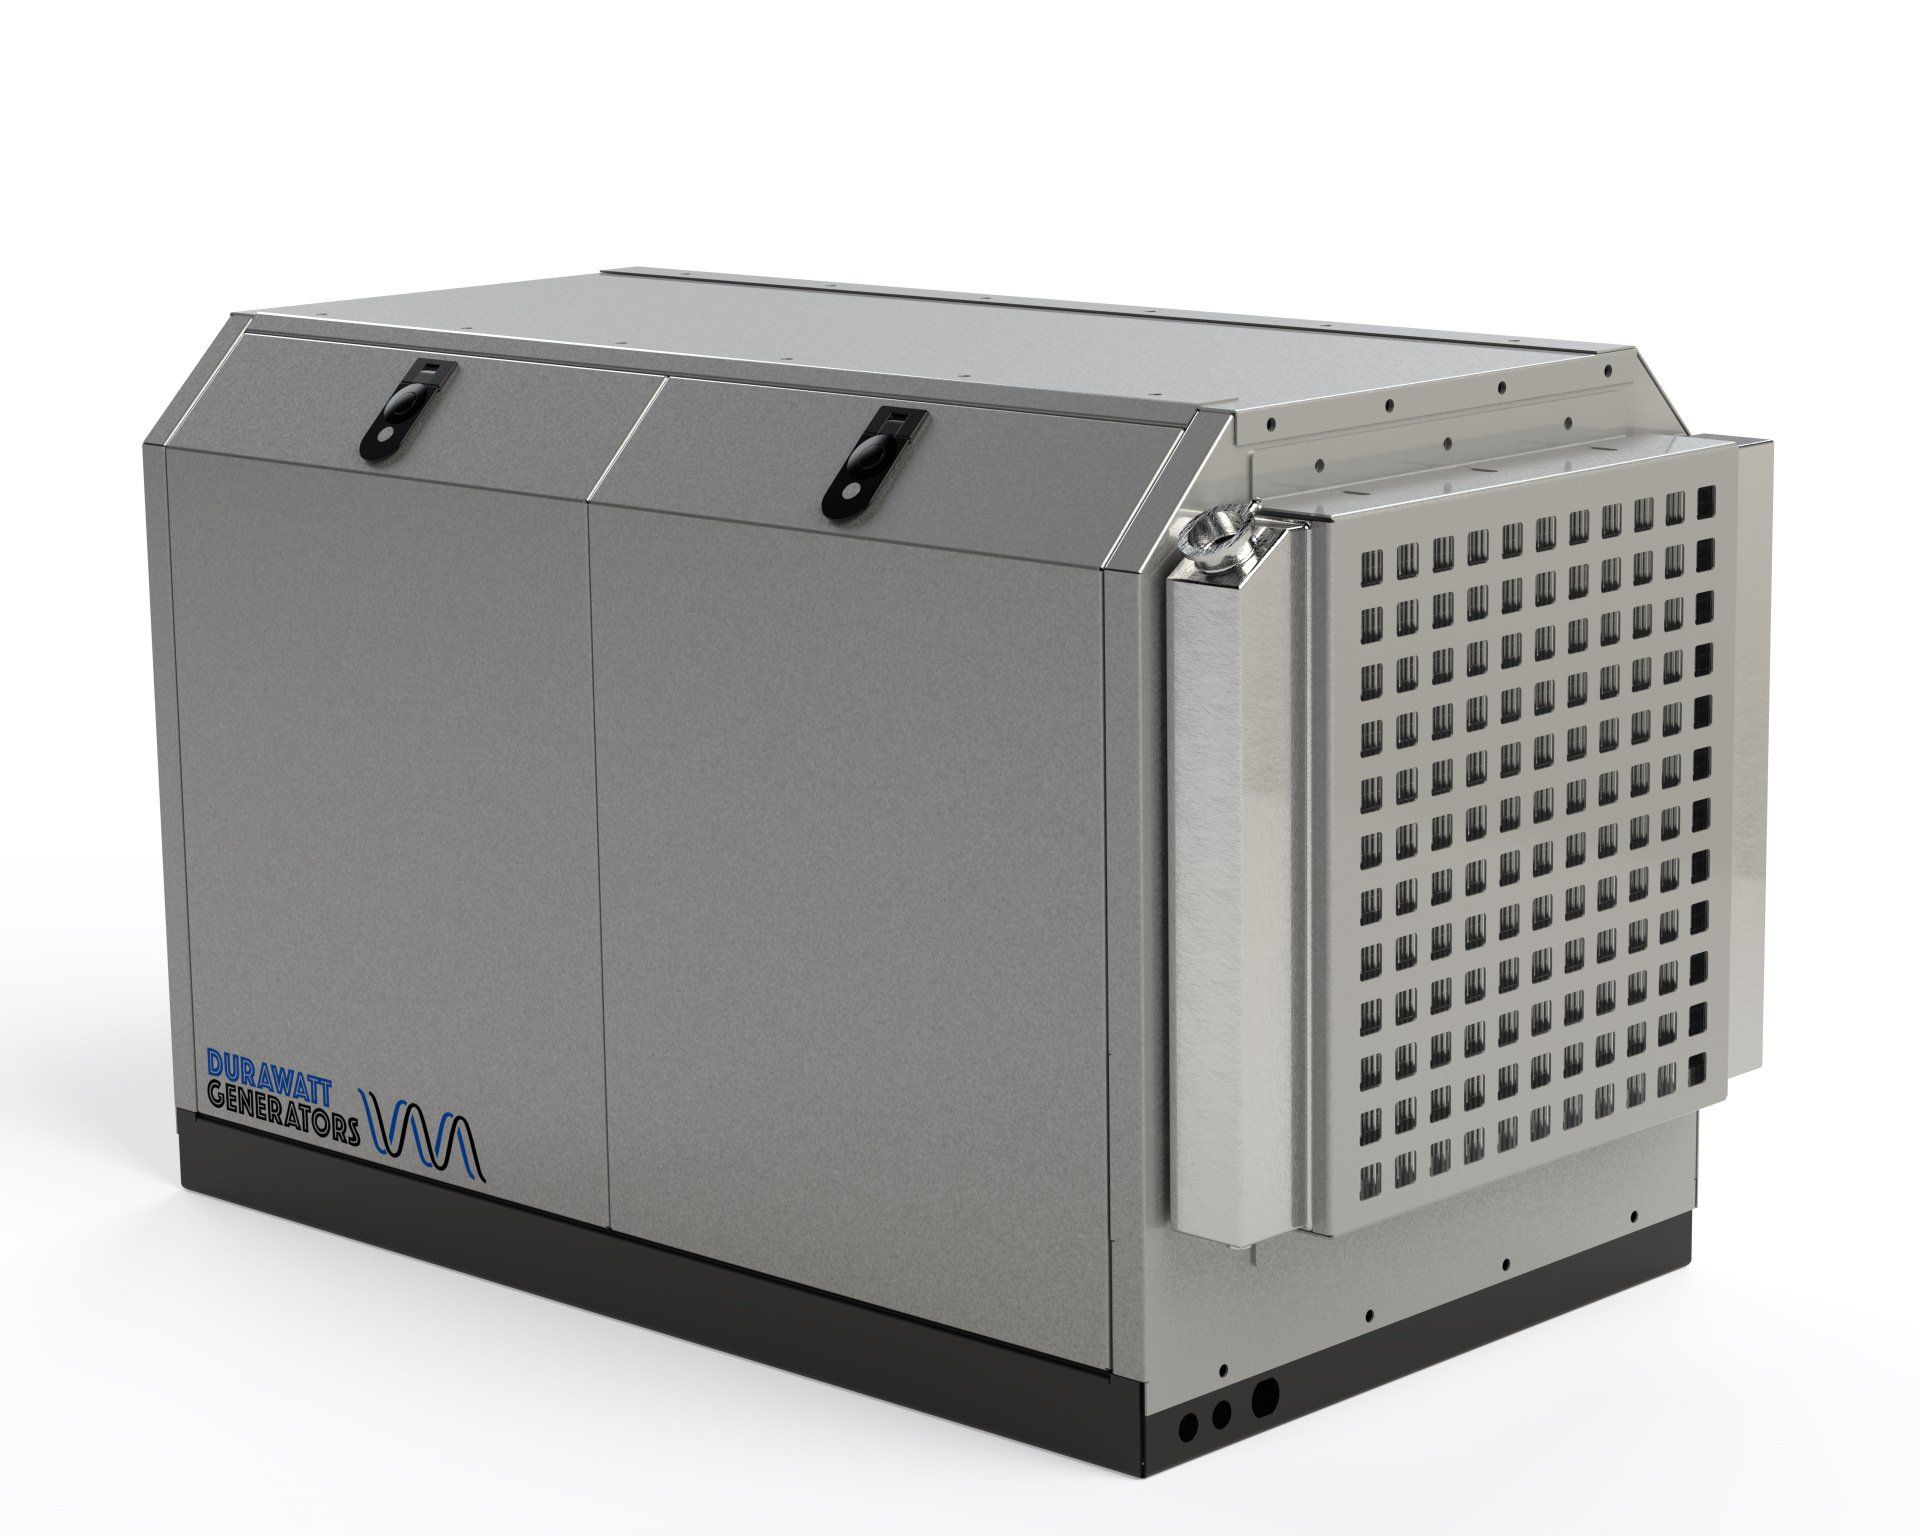 DuraWatt Generators creates the best specialty diesel generators in the USA. 